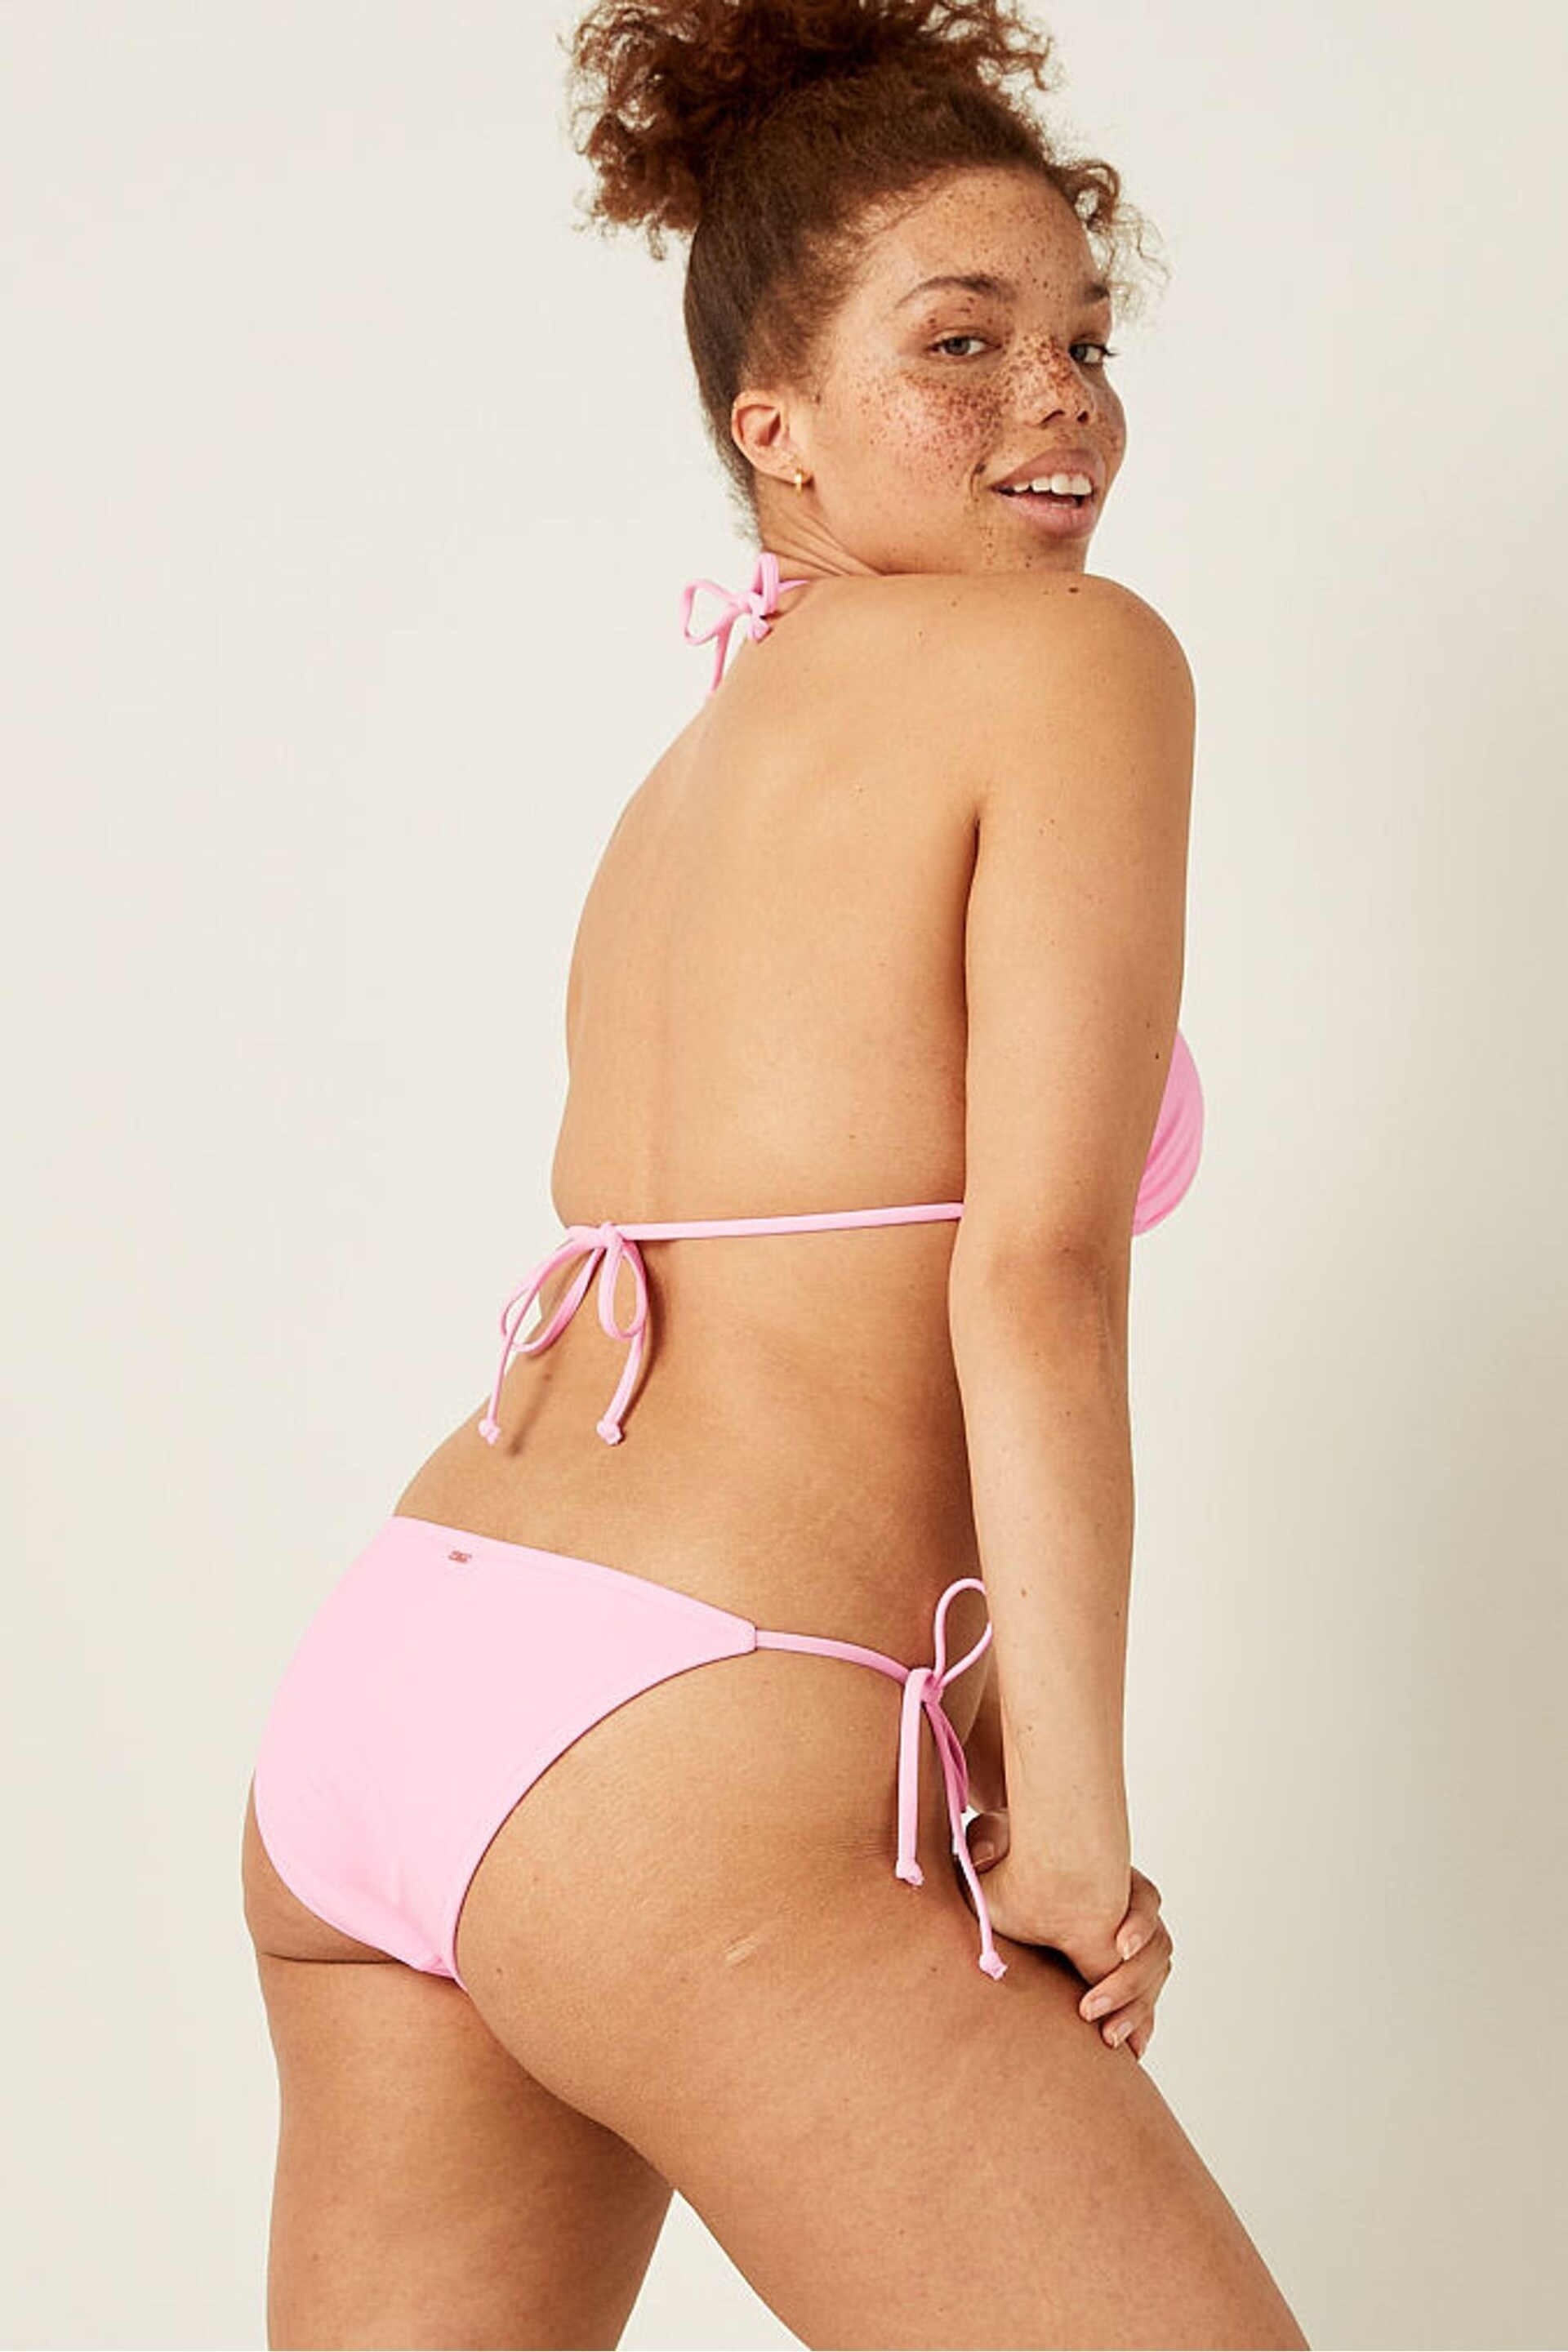 Victoria's Secret PINK Ruched String Bikini Swim Bottom - Image 3 of 5